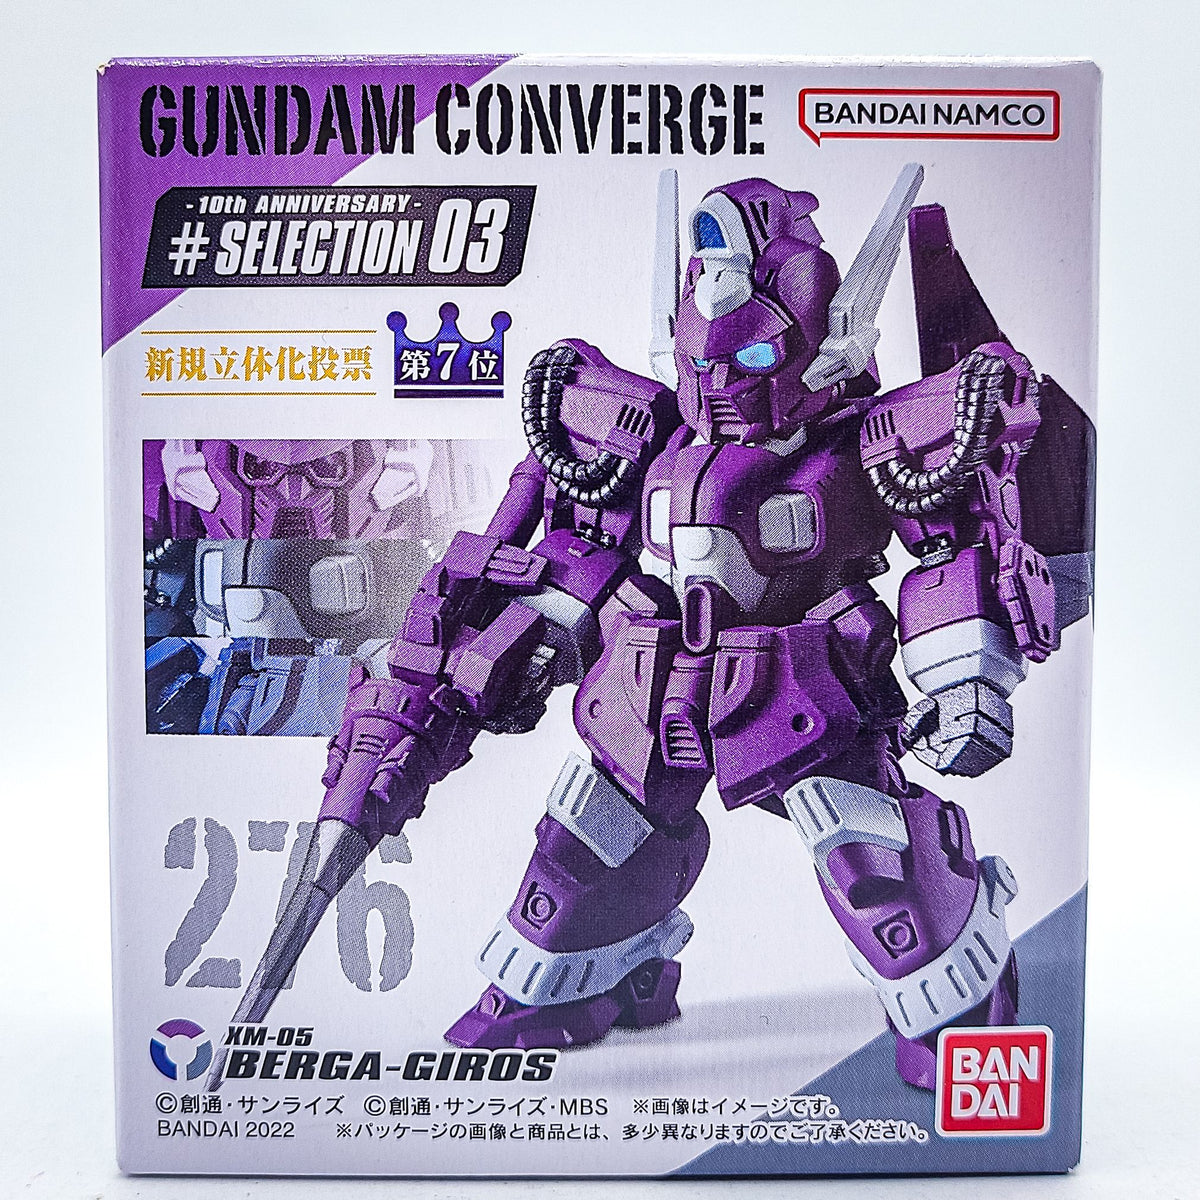 Gundam Converge #276 Berga-Giros by Bandai - 1